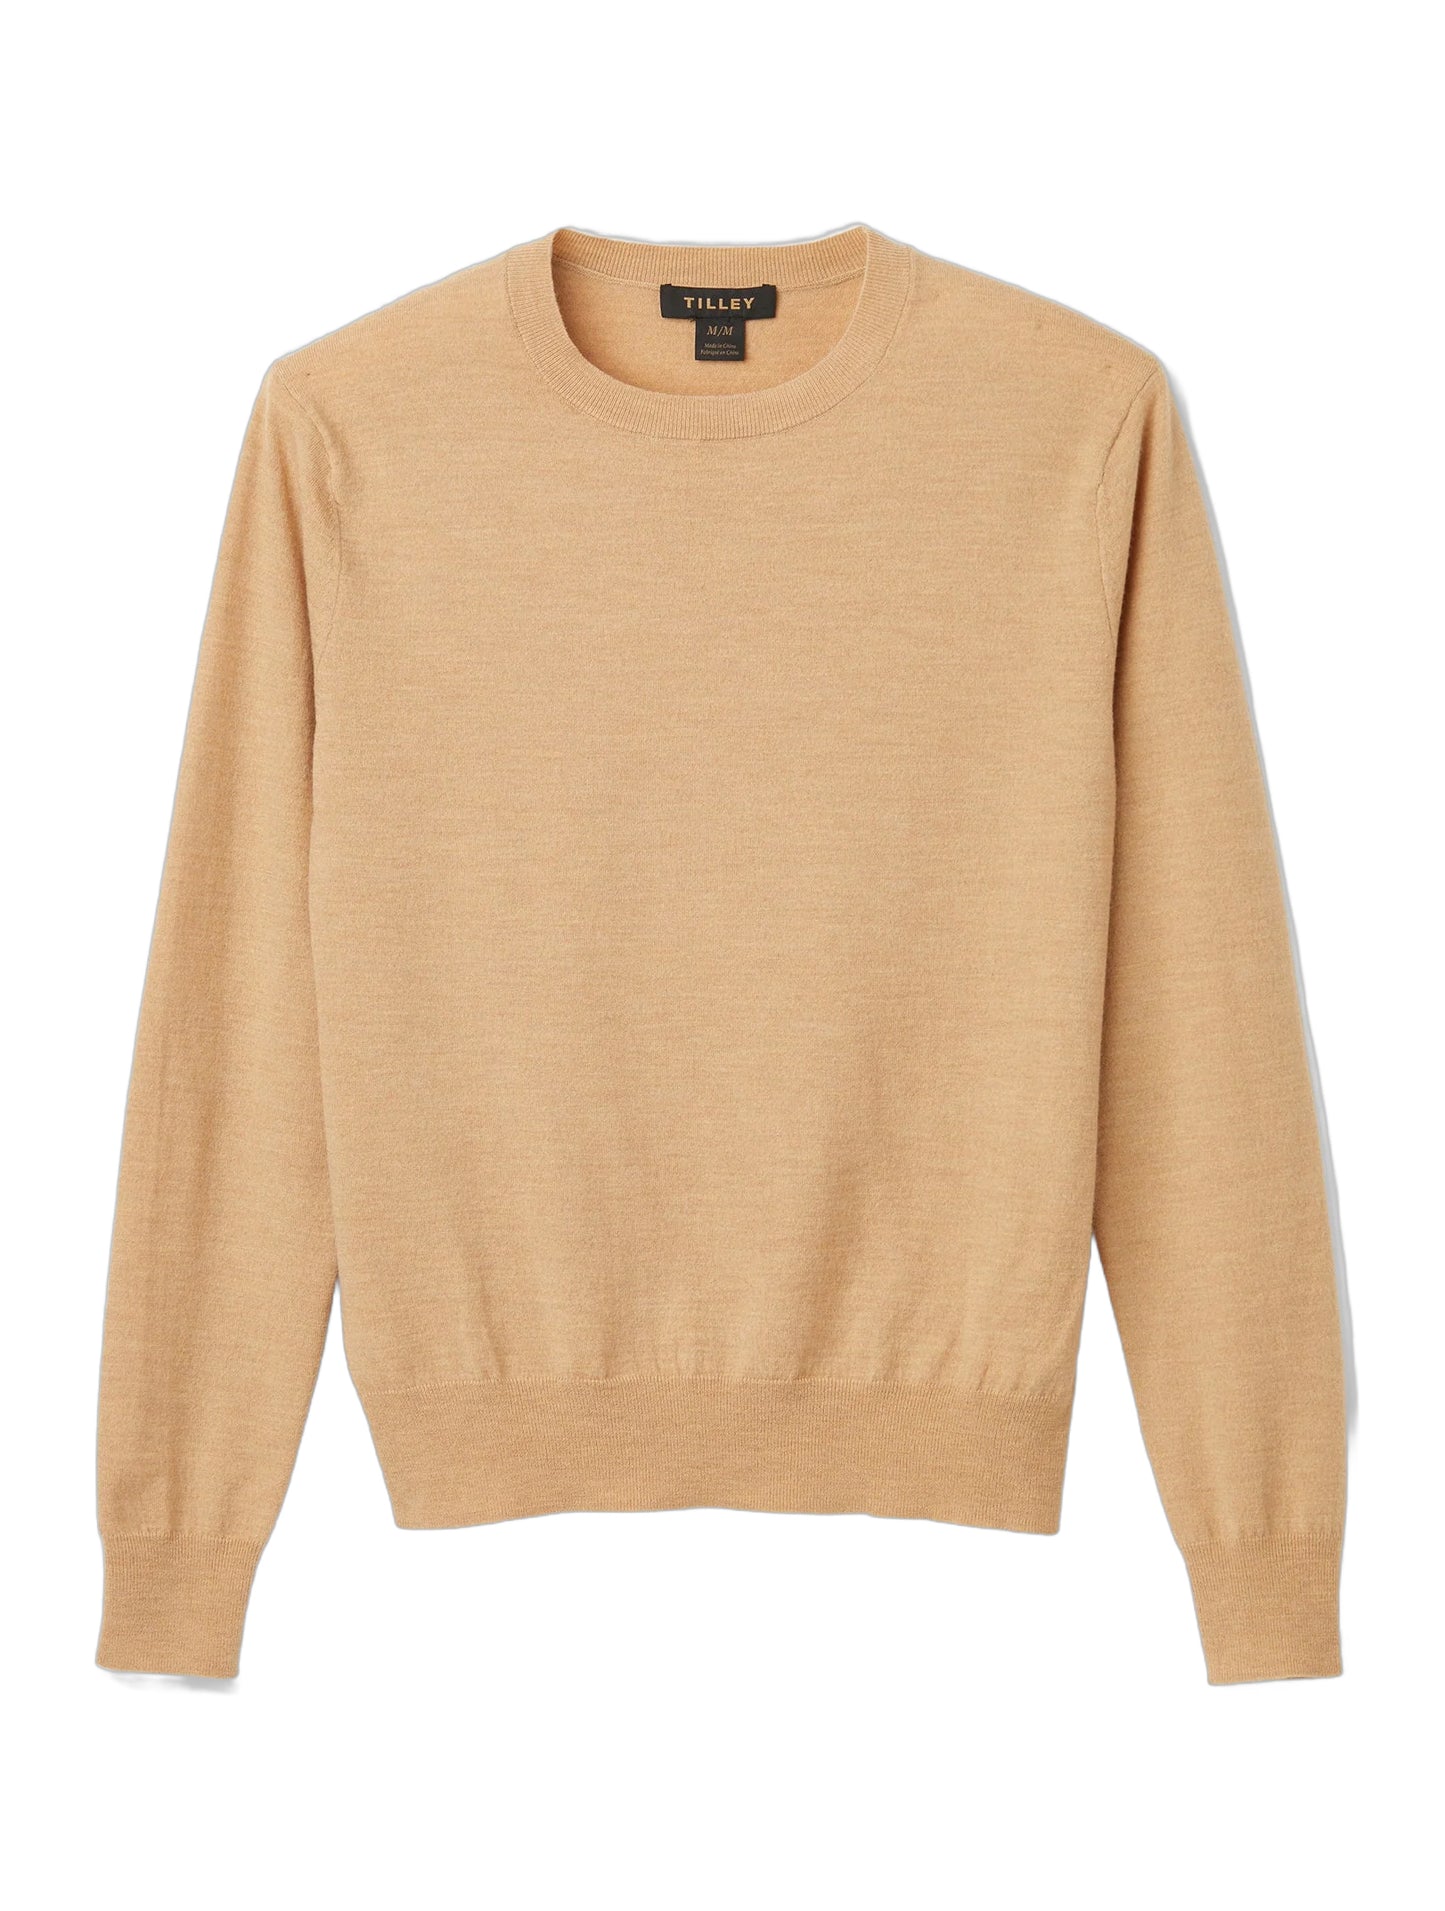 Tilley Extra Fine Merino Sweater - Tan